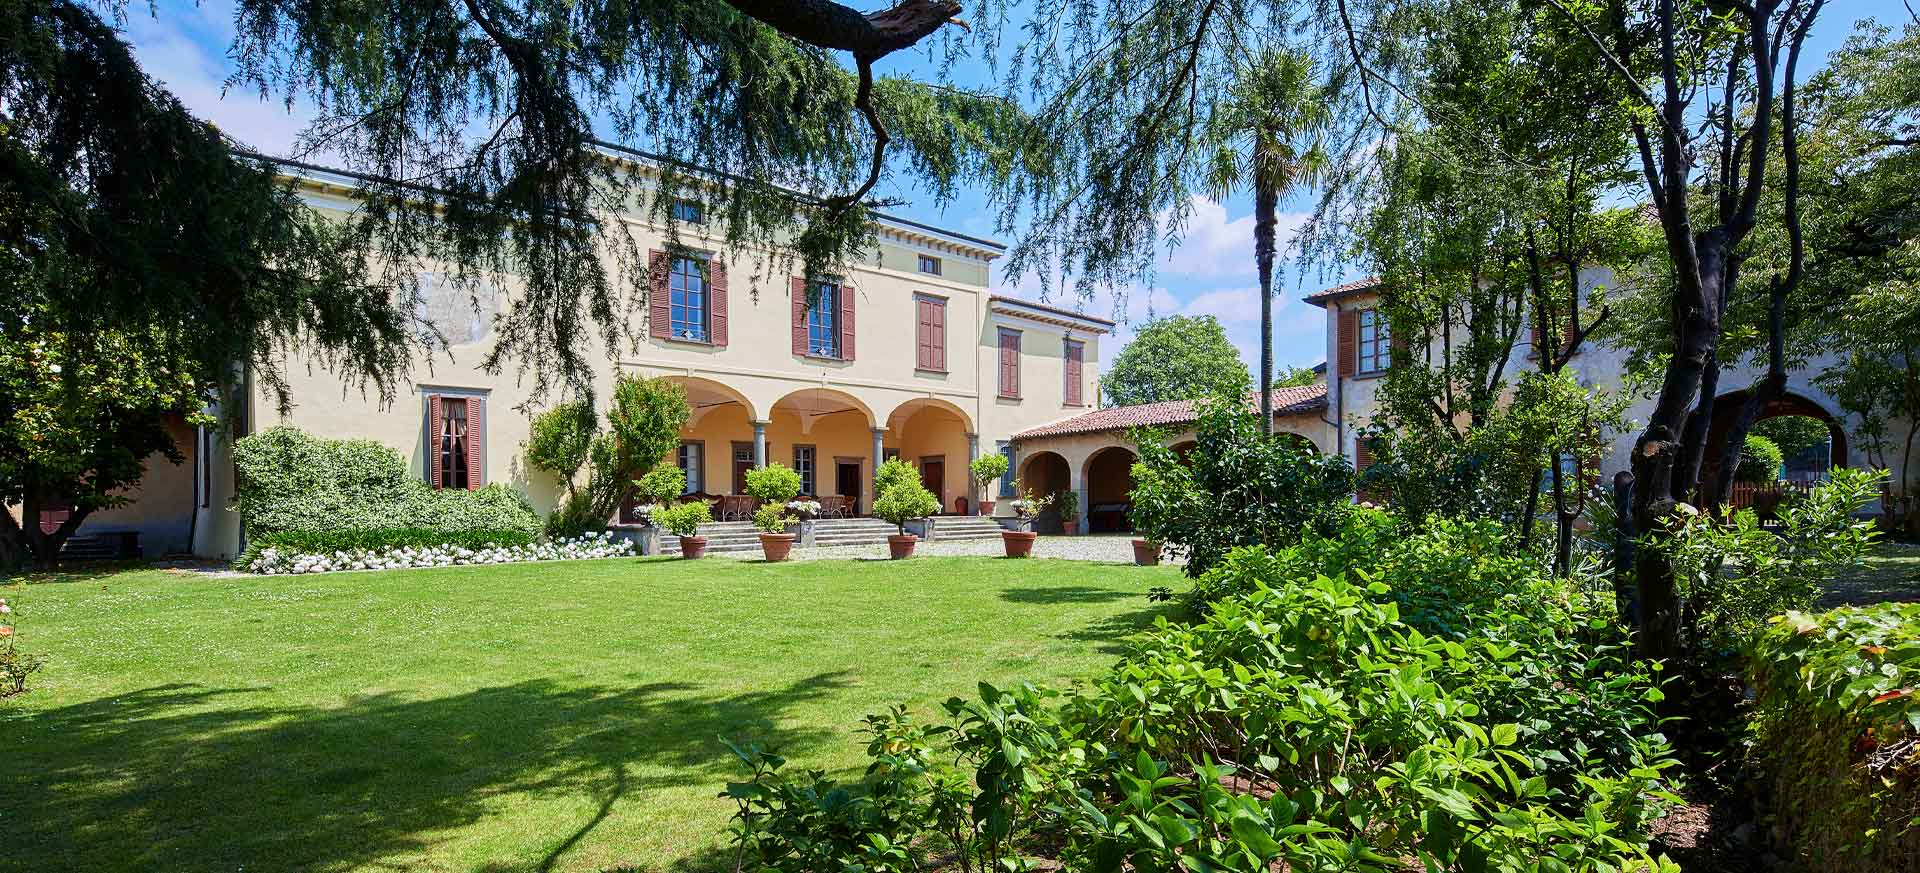 Luxury historic villa Erbusco - Lake Garda